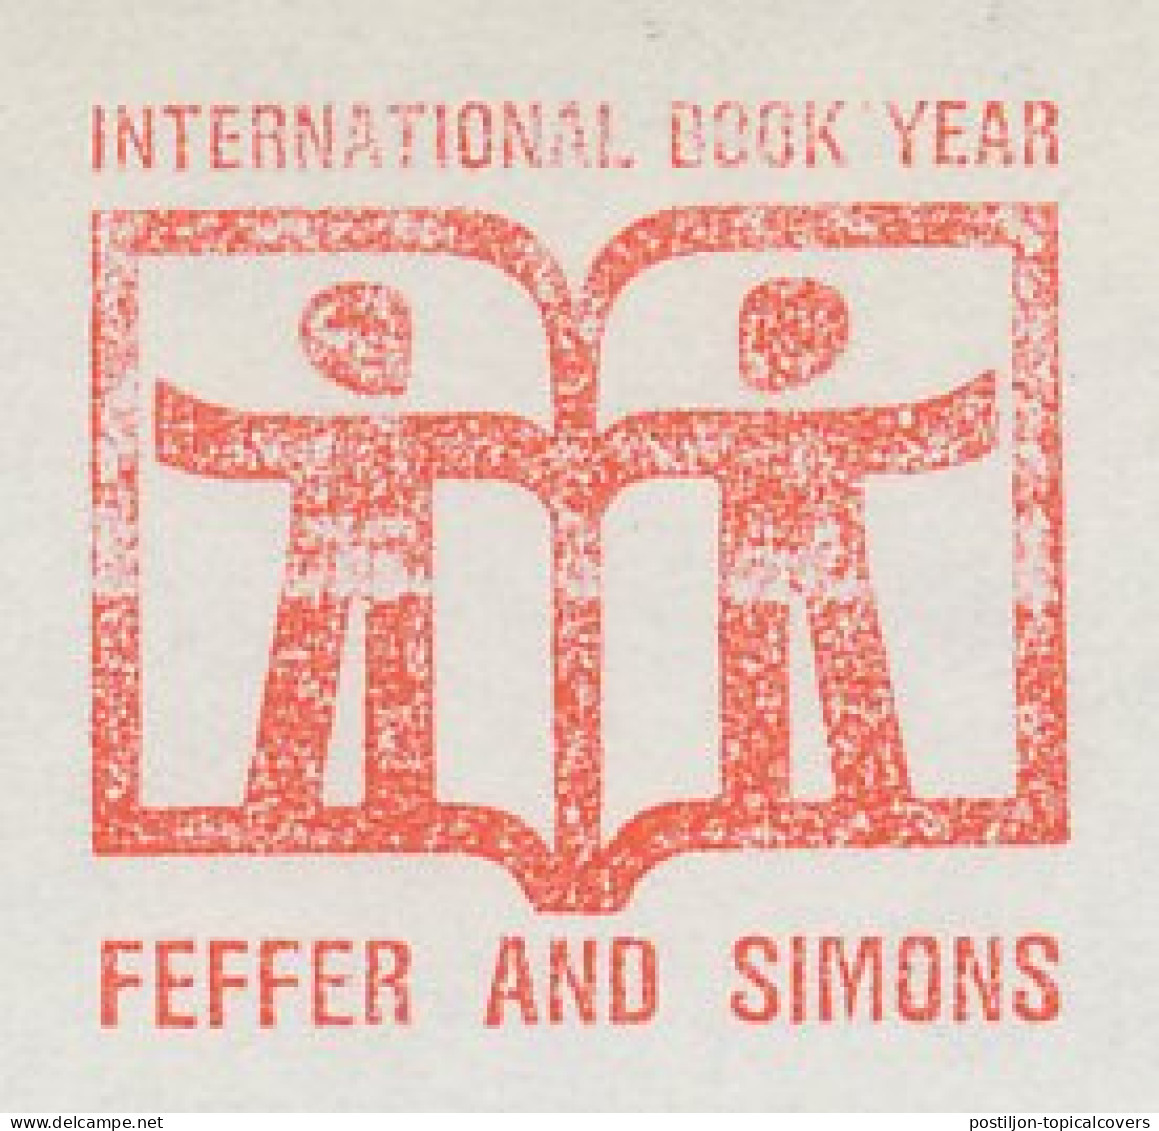 Meter Cut Netherlands 1972 International Book Year - United Nations - UNESCO - VN